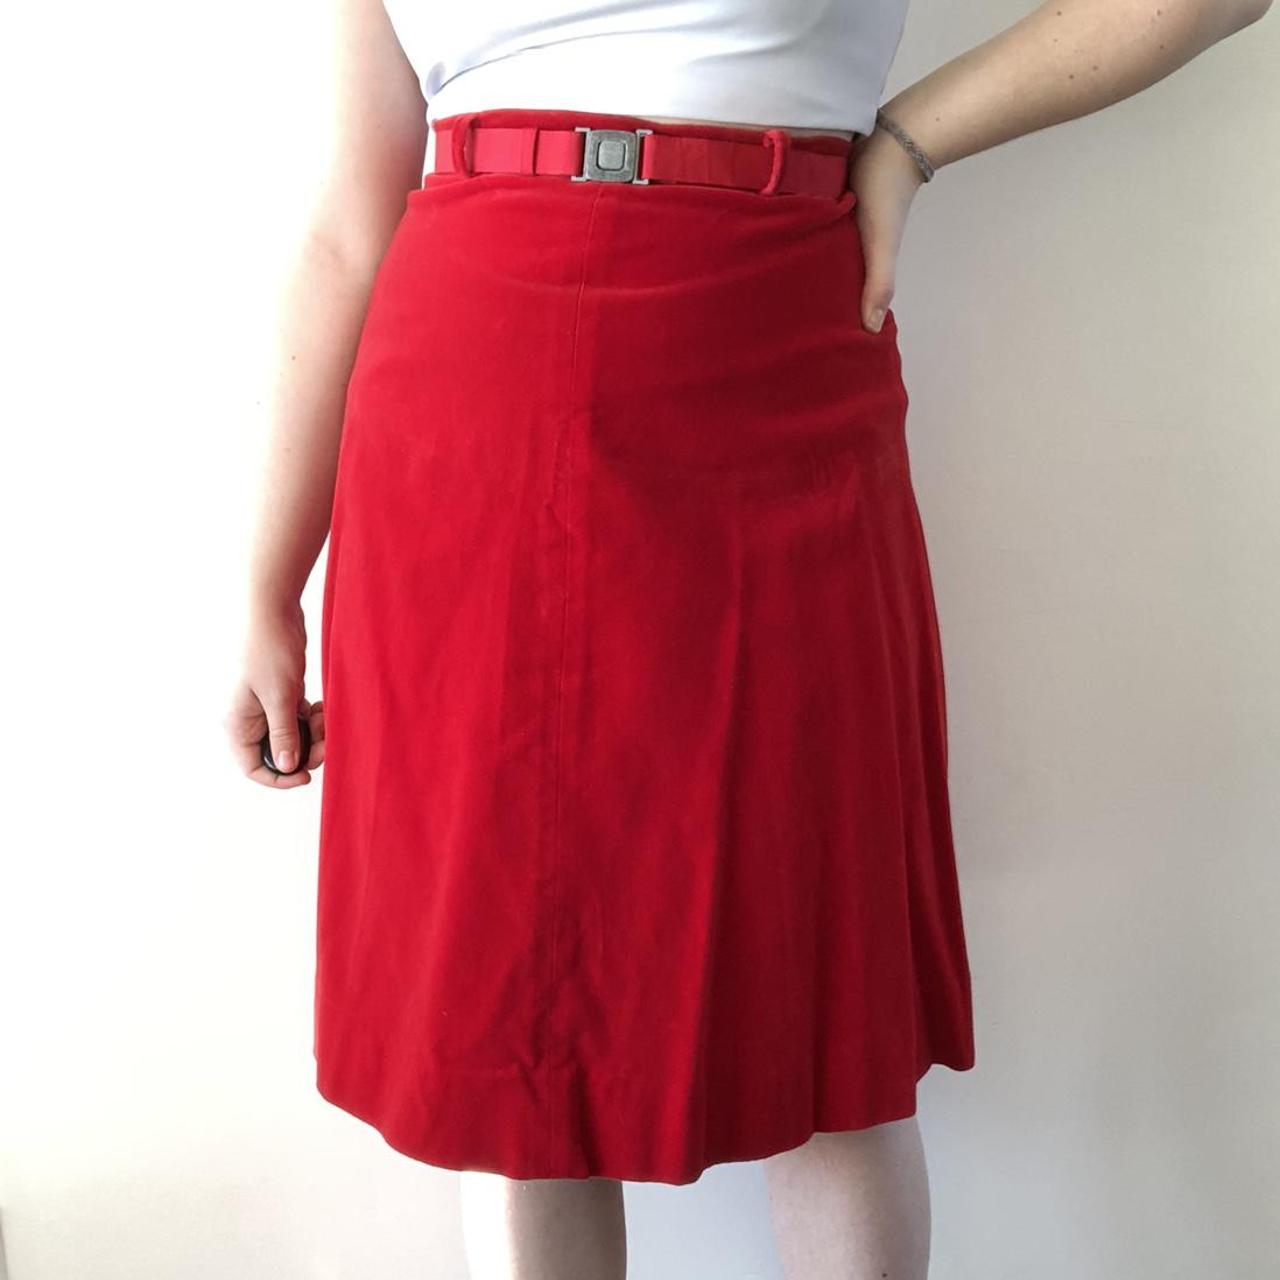 Red velvet skirt with red belt. The buckle is metal.... - Depop